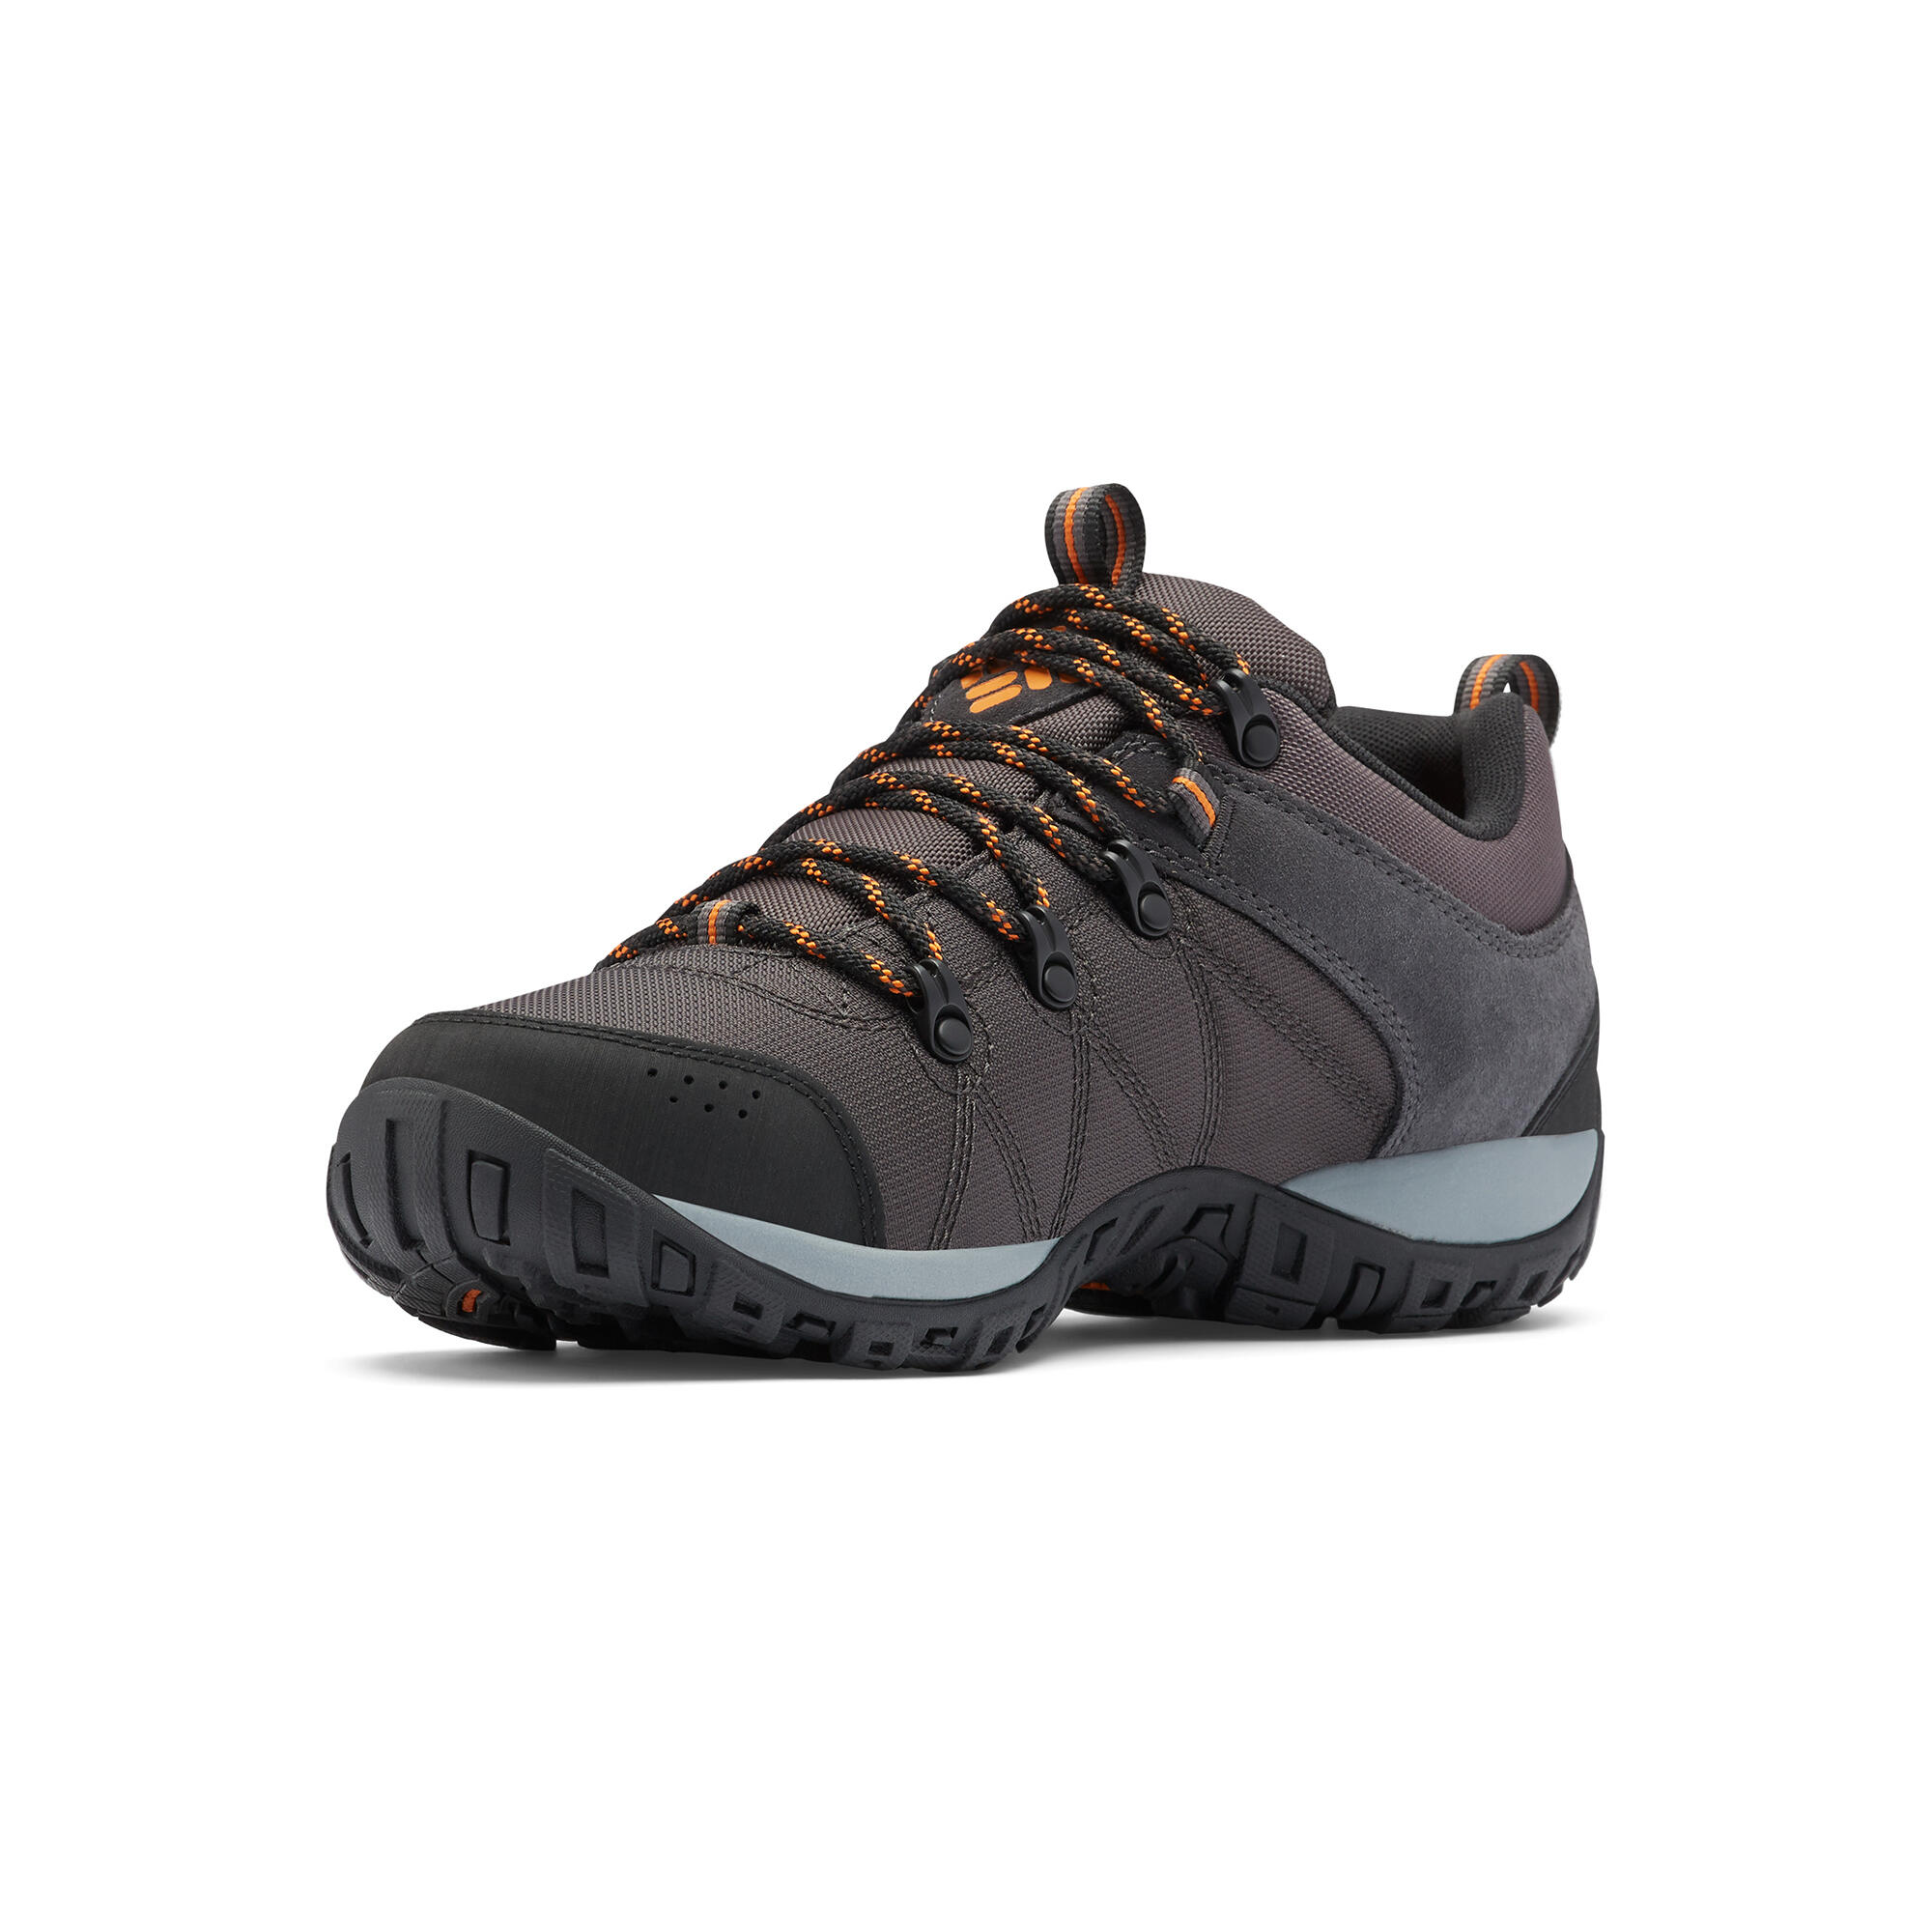 Men’s hiking shoes - Peakfreak Venture Columbia lowtop 5/9